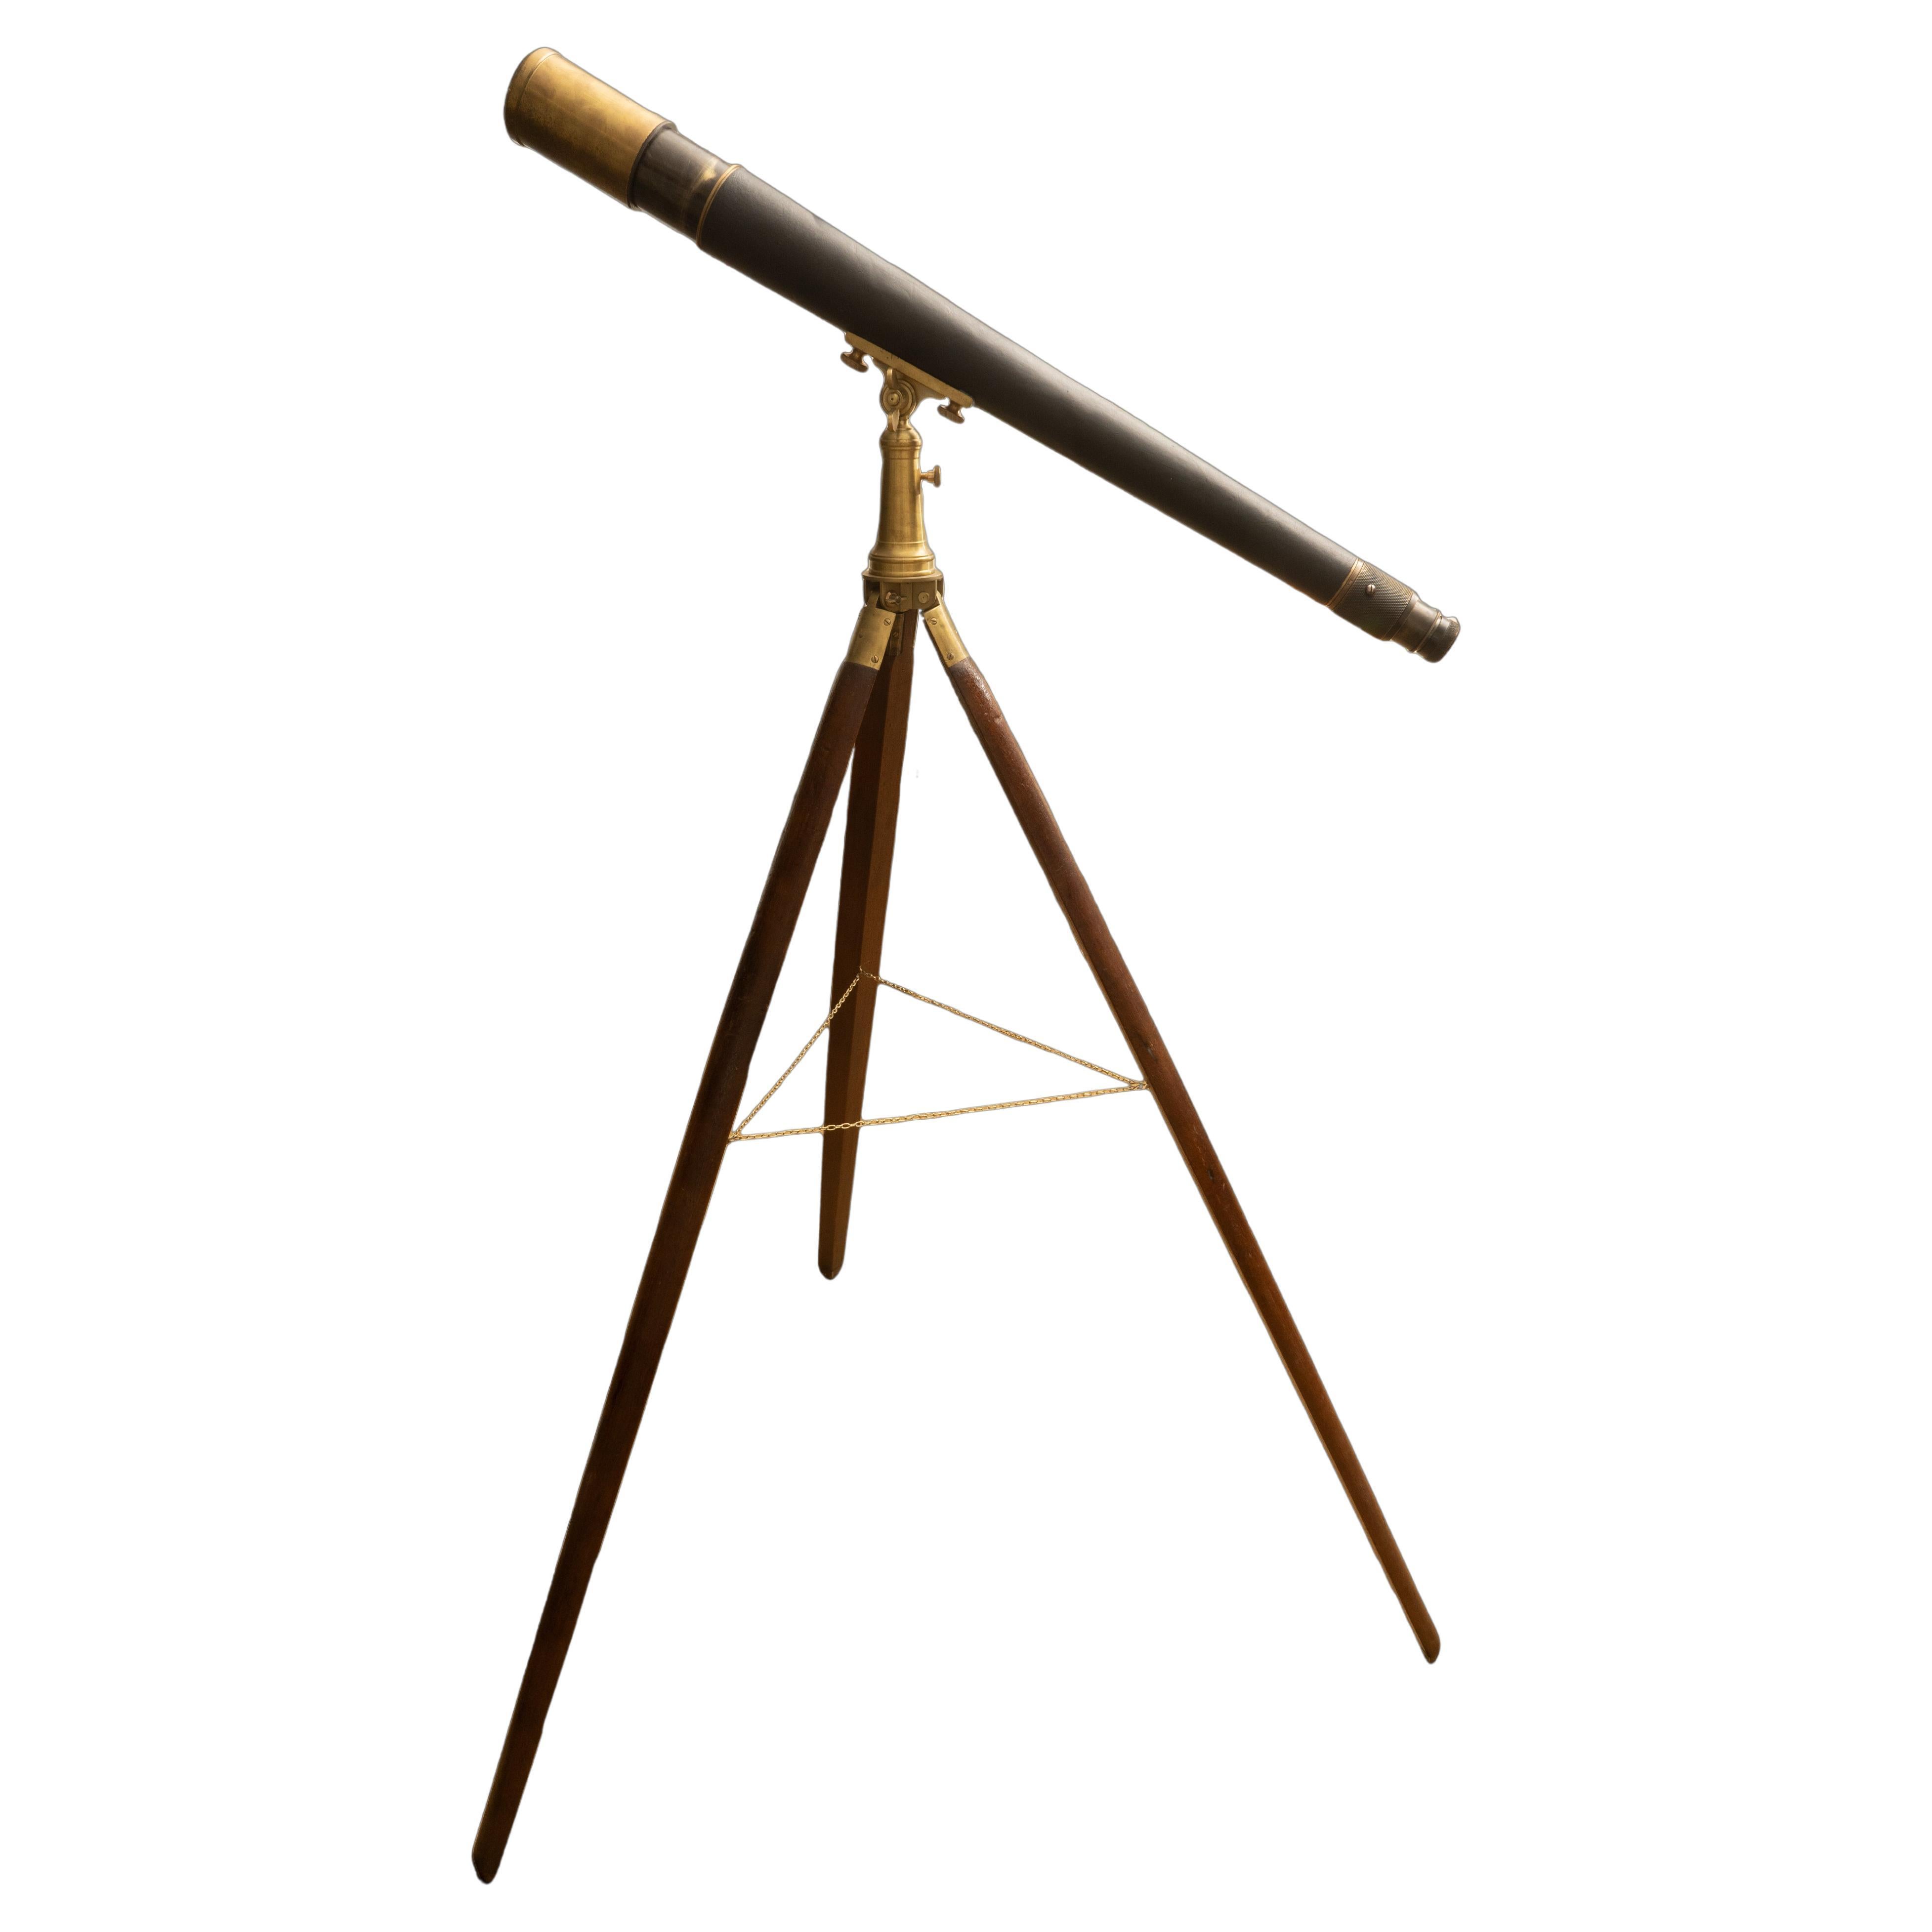 W. Ottway Single-Draw WWII Military Sighting Telescope